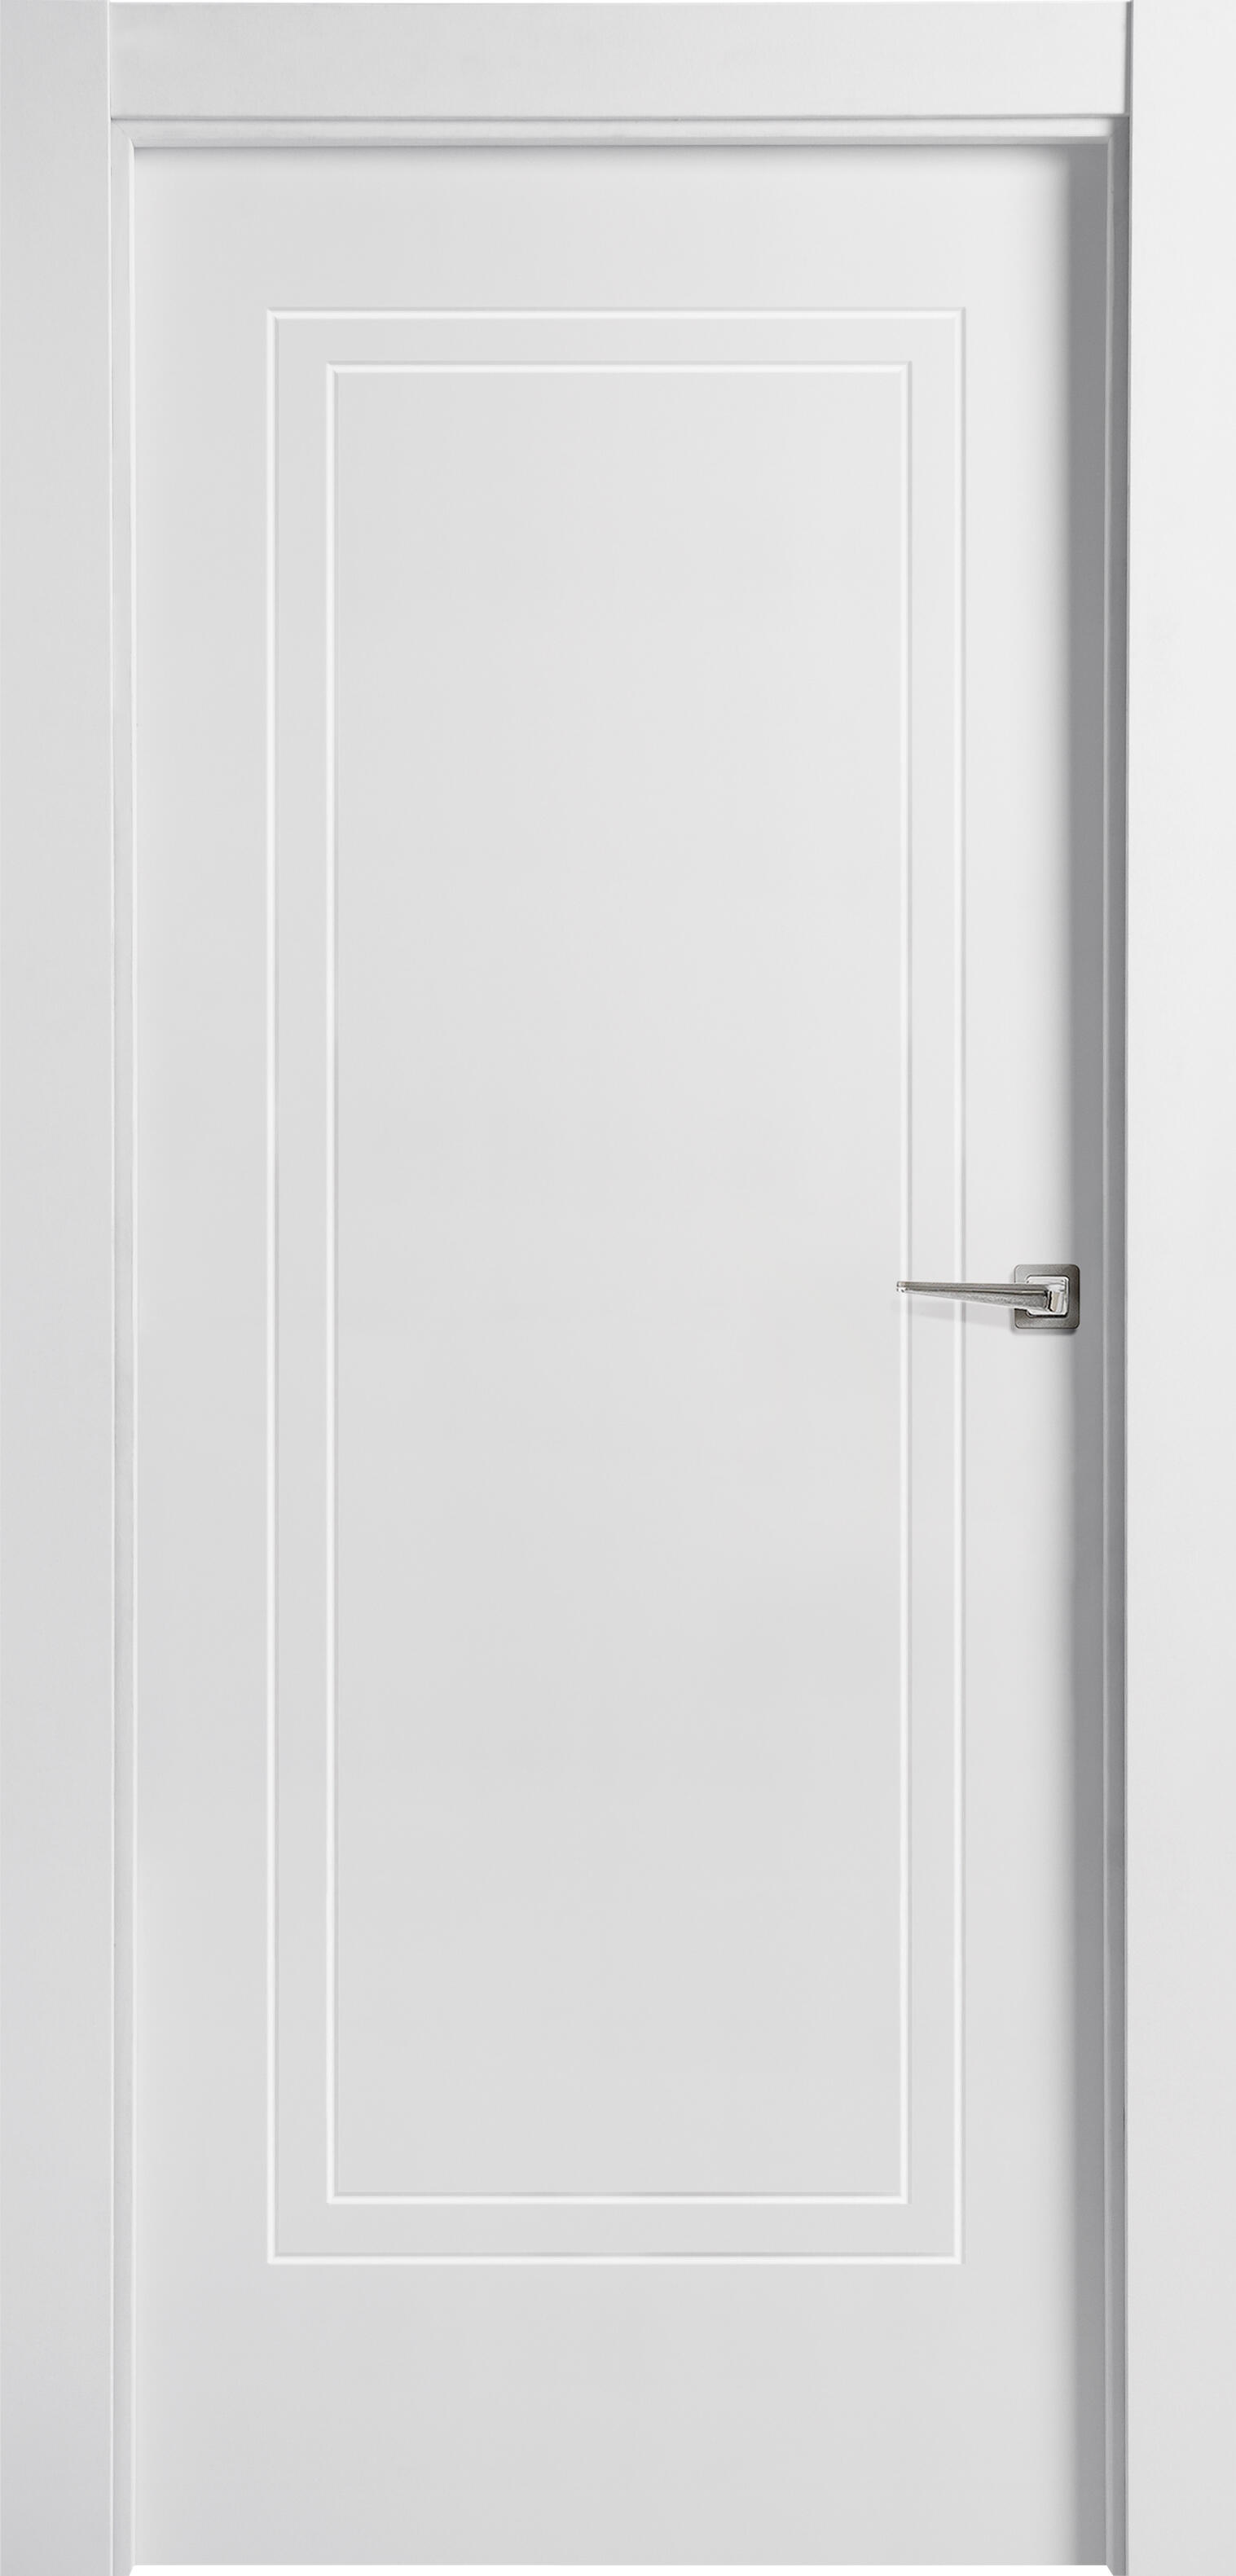 Puerta miramar blanco de apertura izquierda de 11x62.5 cm